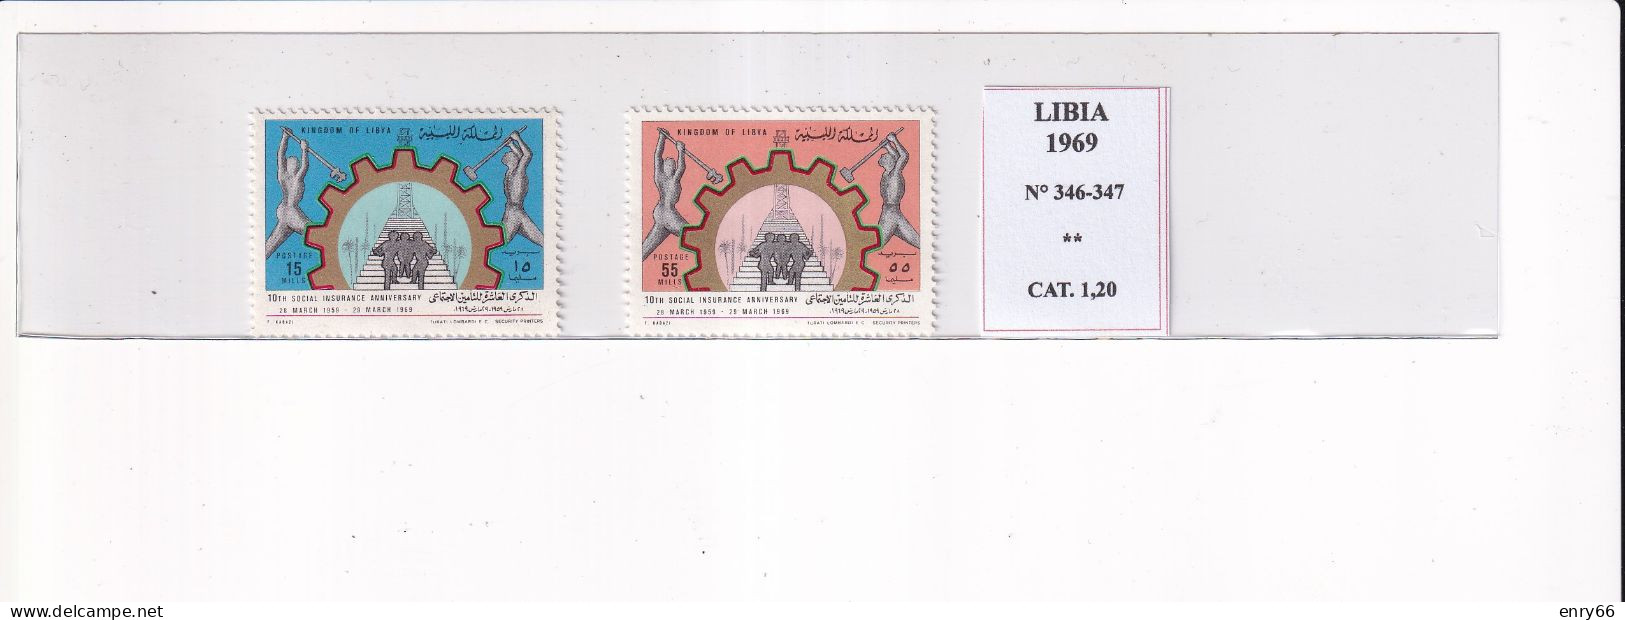 LIBIA 1969 N°346-347 MNH - Libia